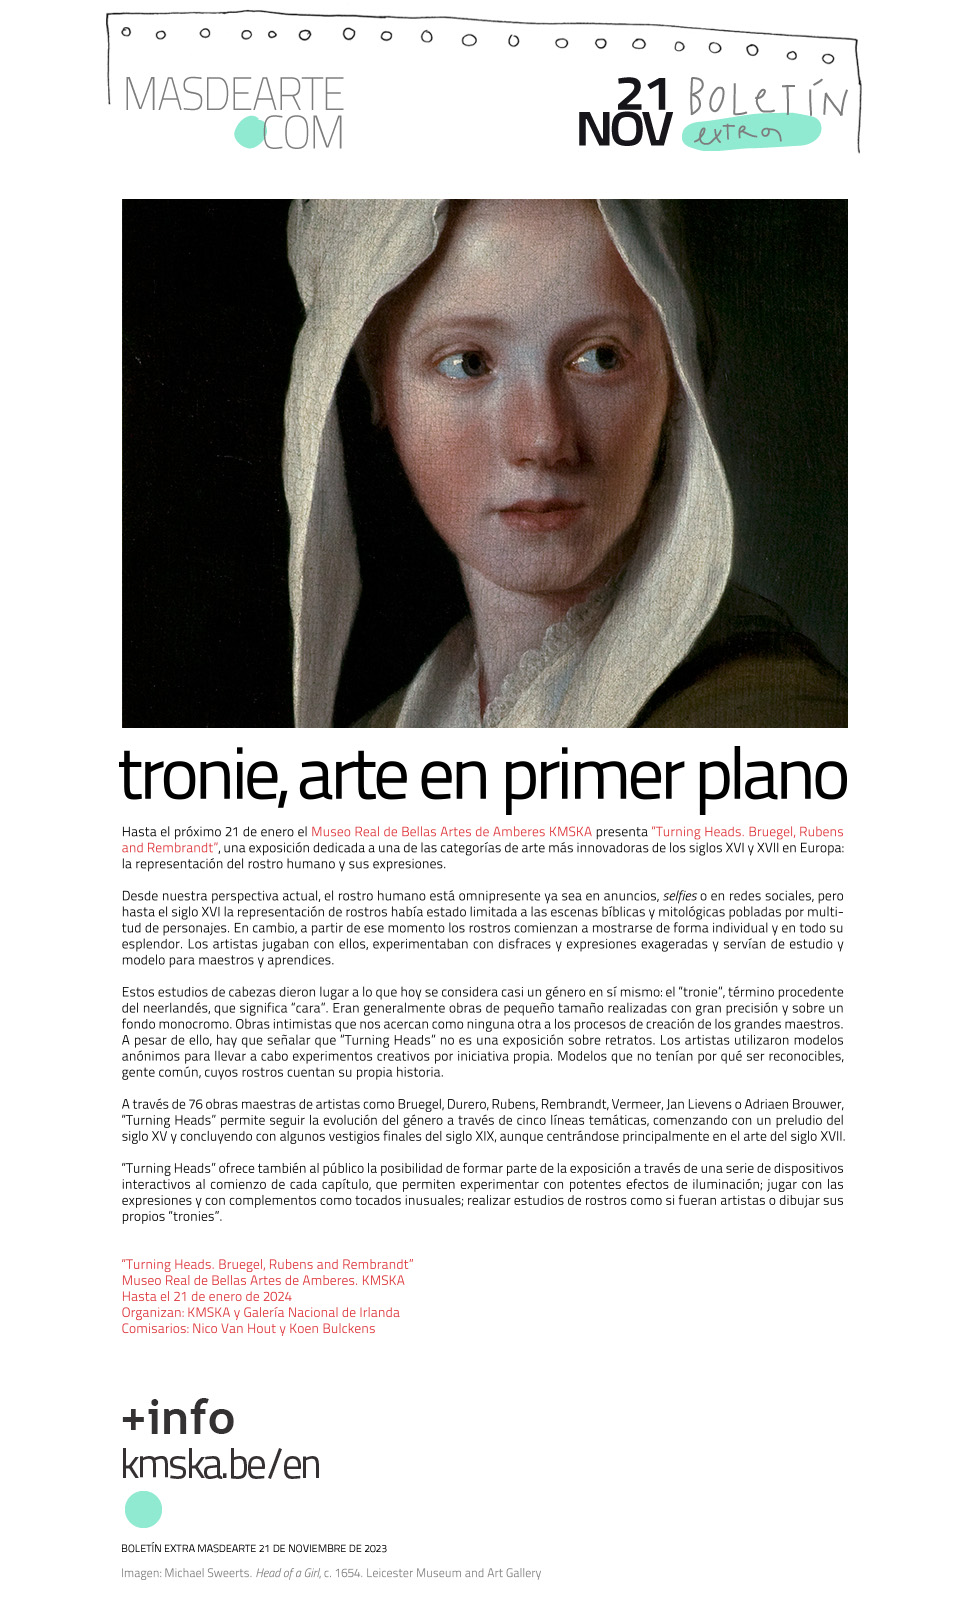 Extra masdearte: Turning Heads. Bruegel, Rubens and Rembrandt, en el KMSKA. Tronies o el arte del primer plano. 
76 obras maestras.